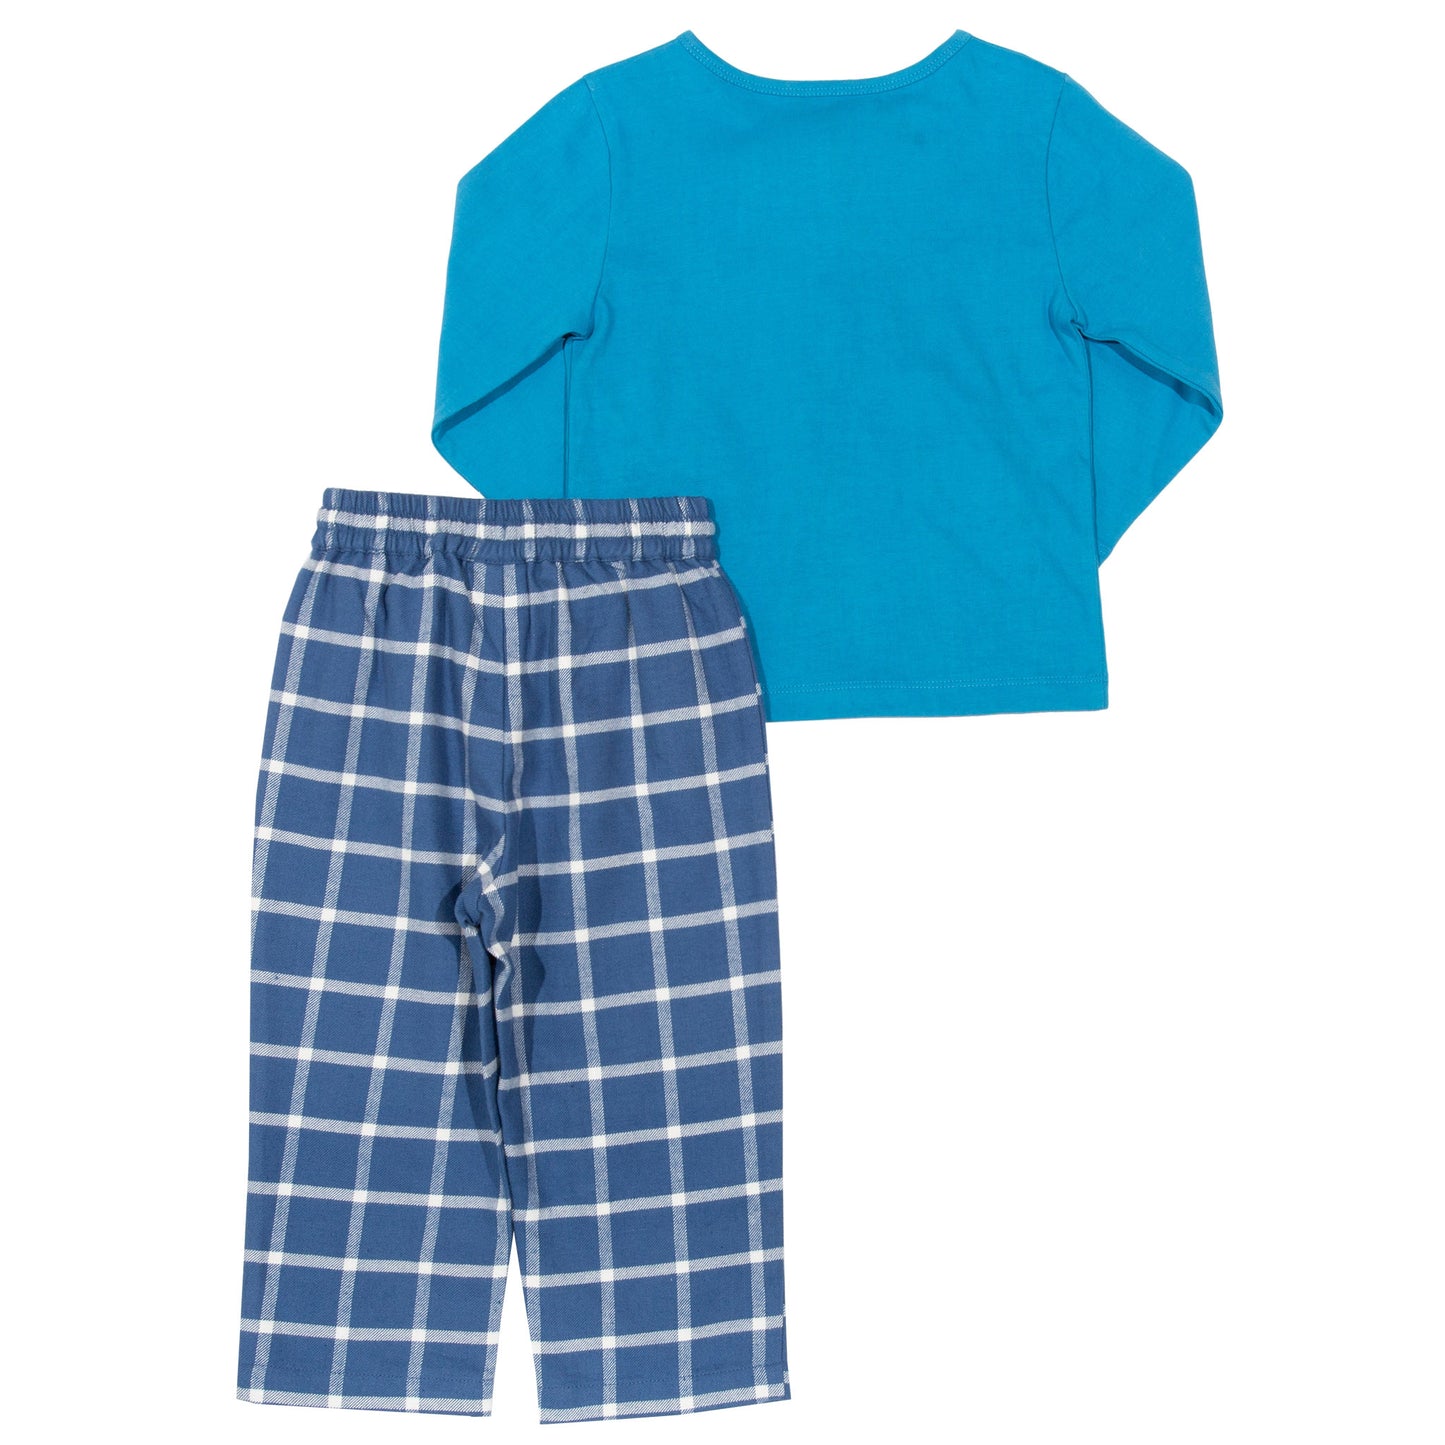 Cranborne Atlantic blue pyjamas